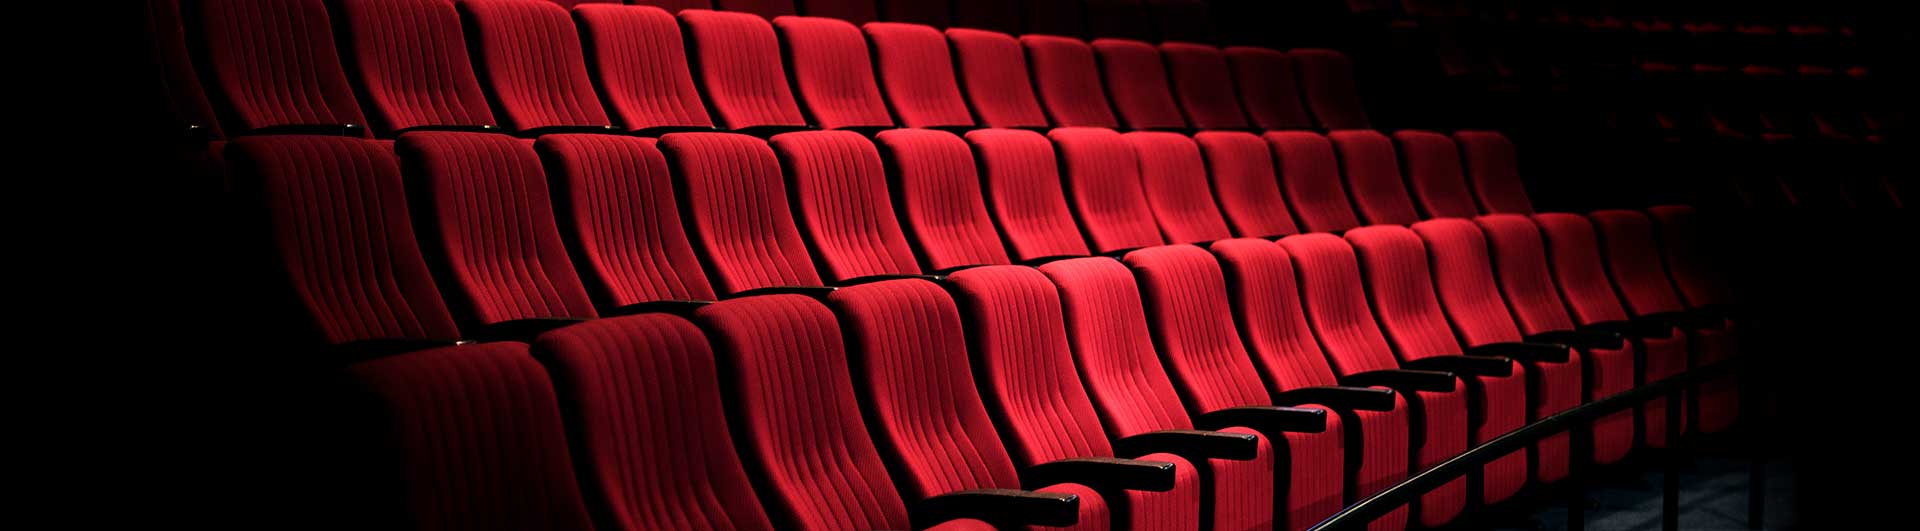 پردیس سینما عصرجدید اراک